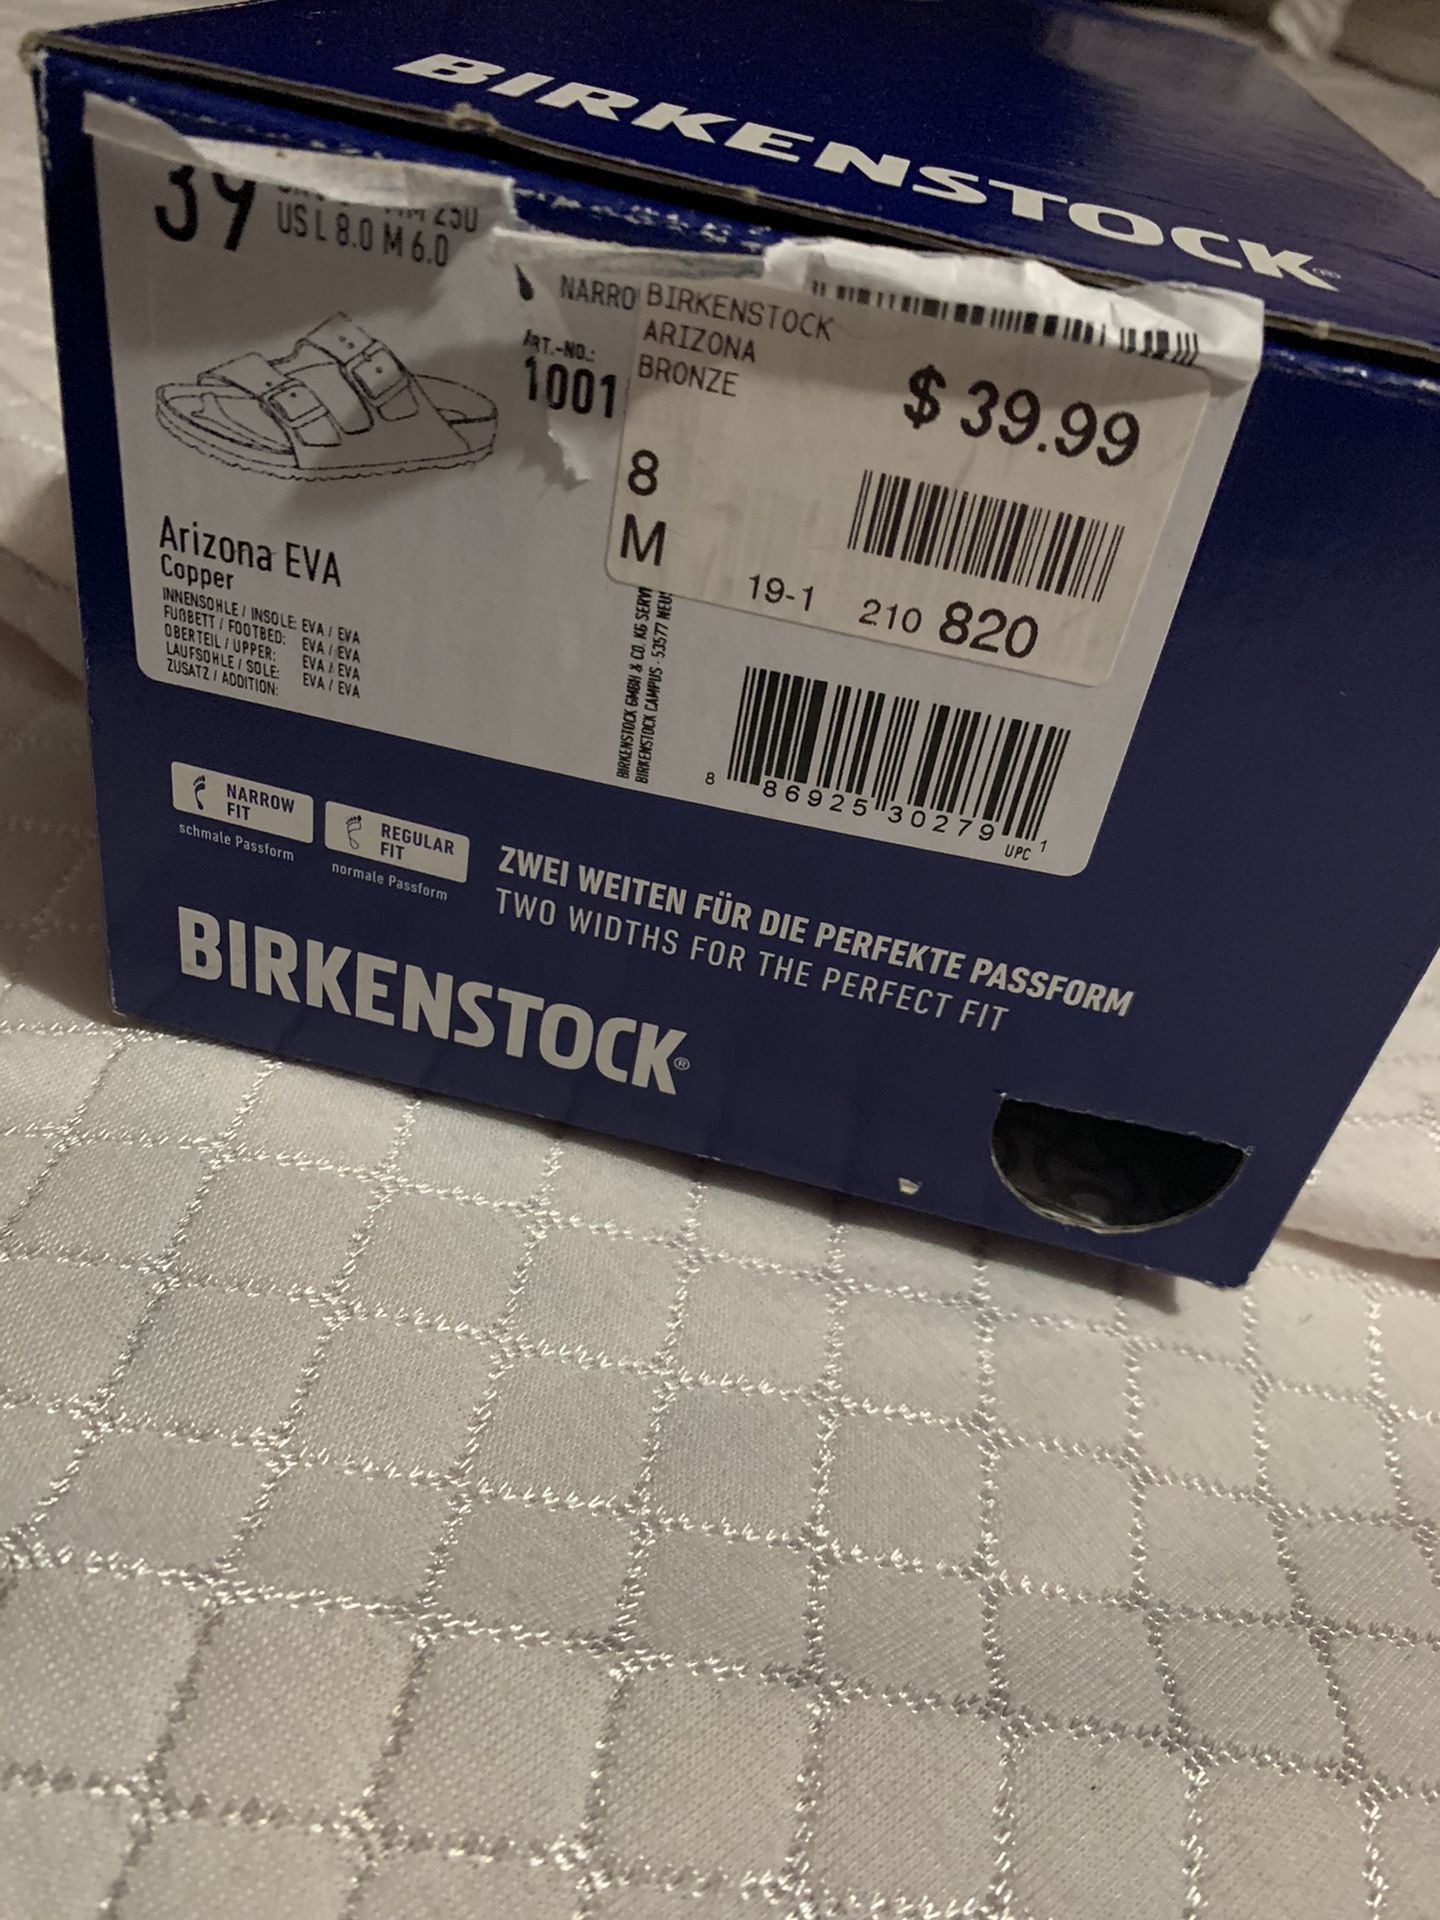 Birkenstock “Arizona” women’s size 8